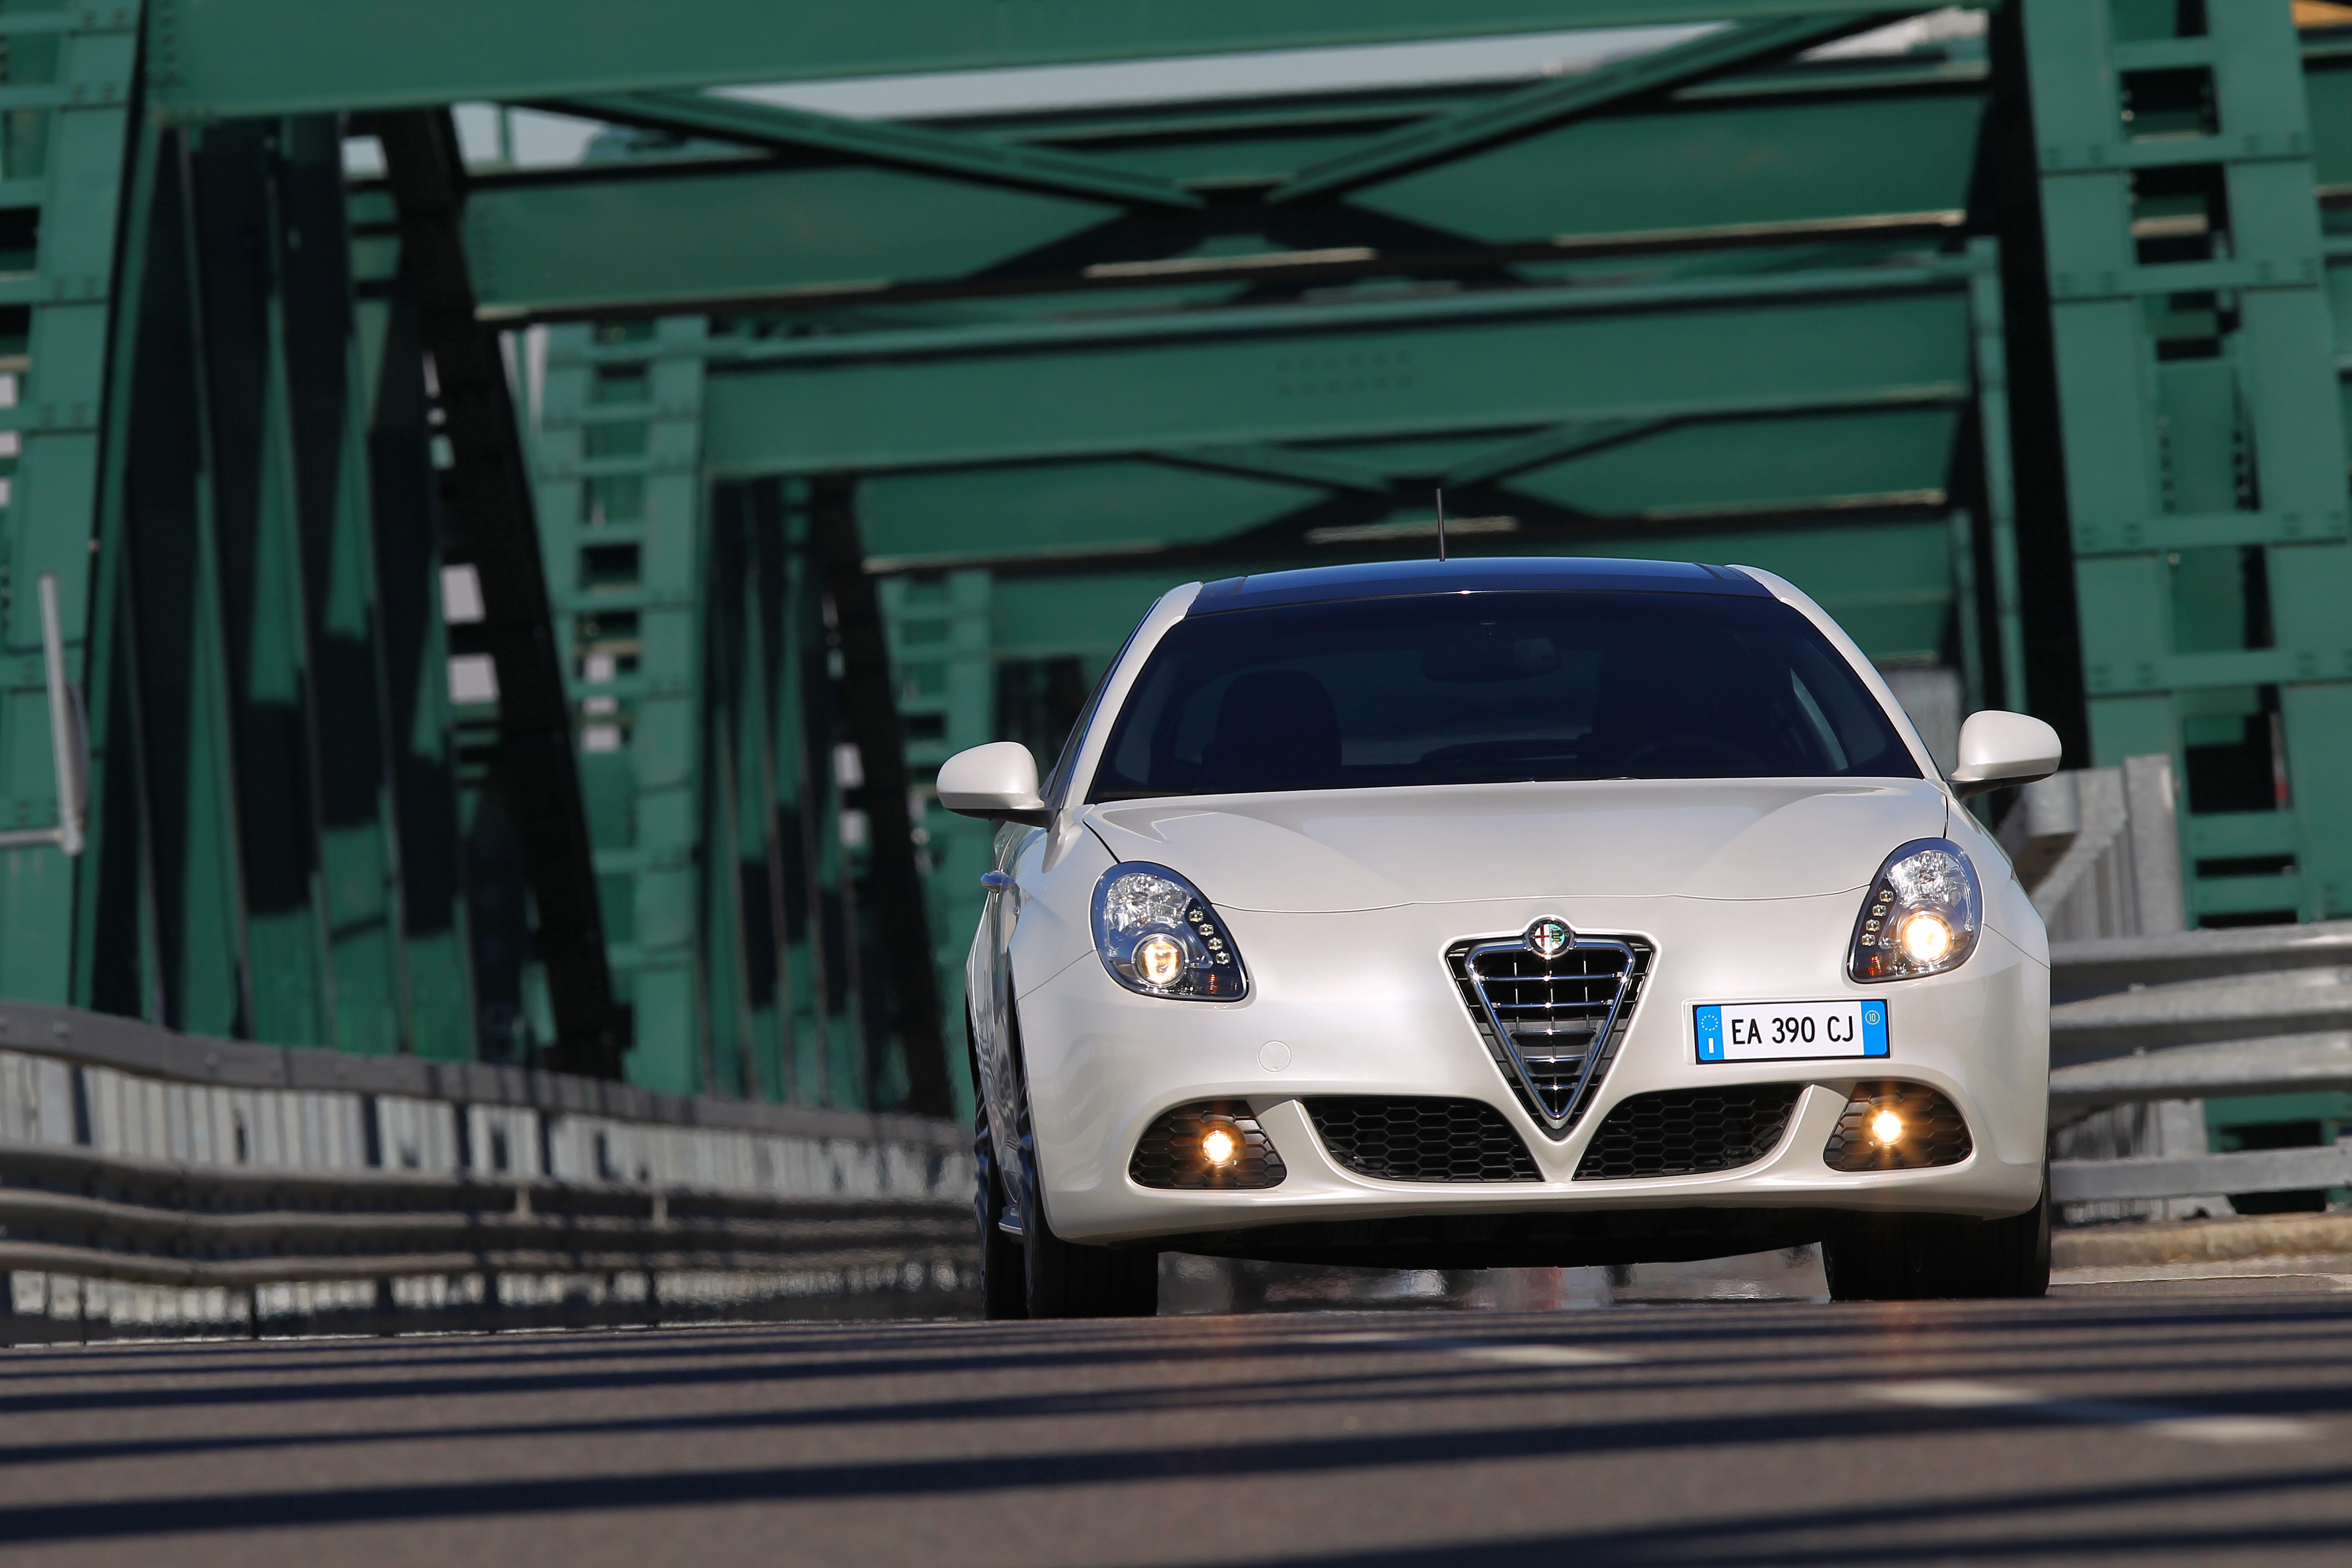 Alfa Romeo Giulietta front | Flickr - Photo Sharing!